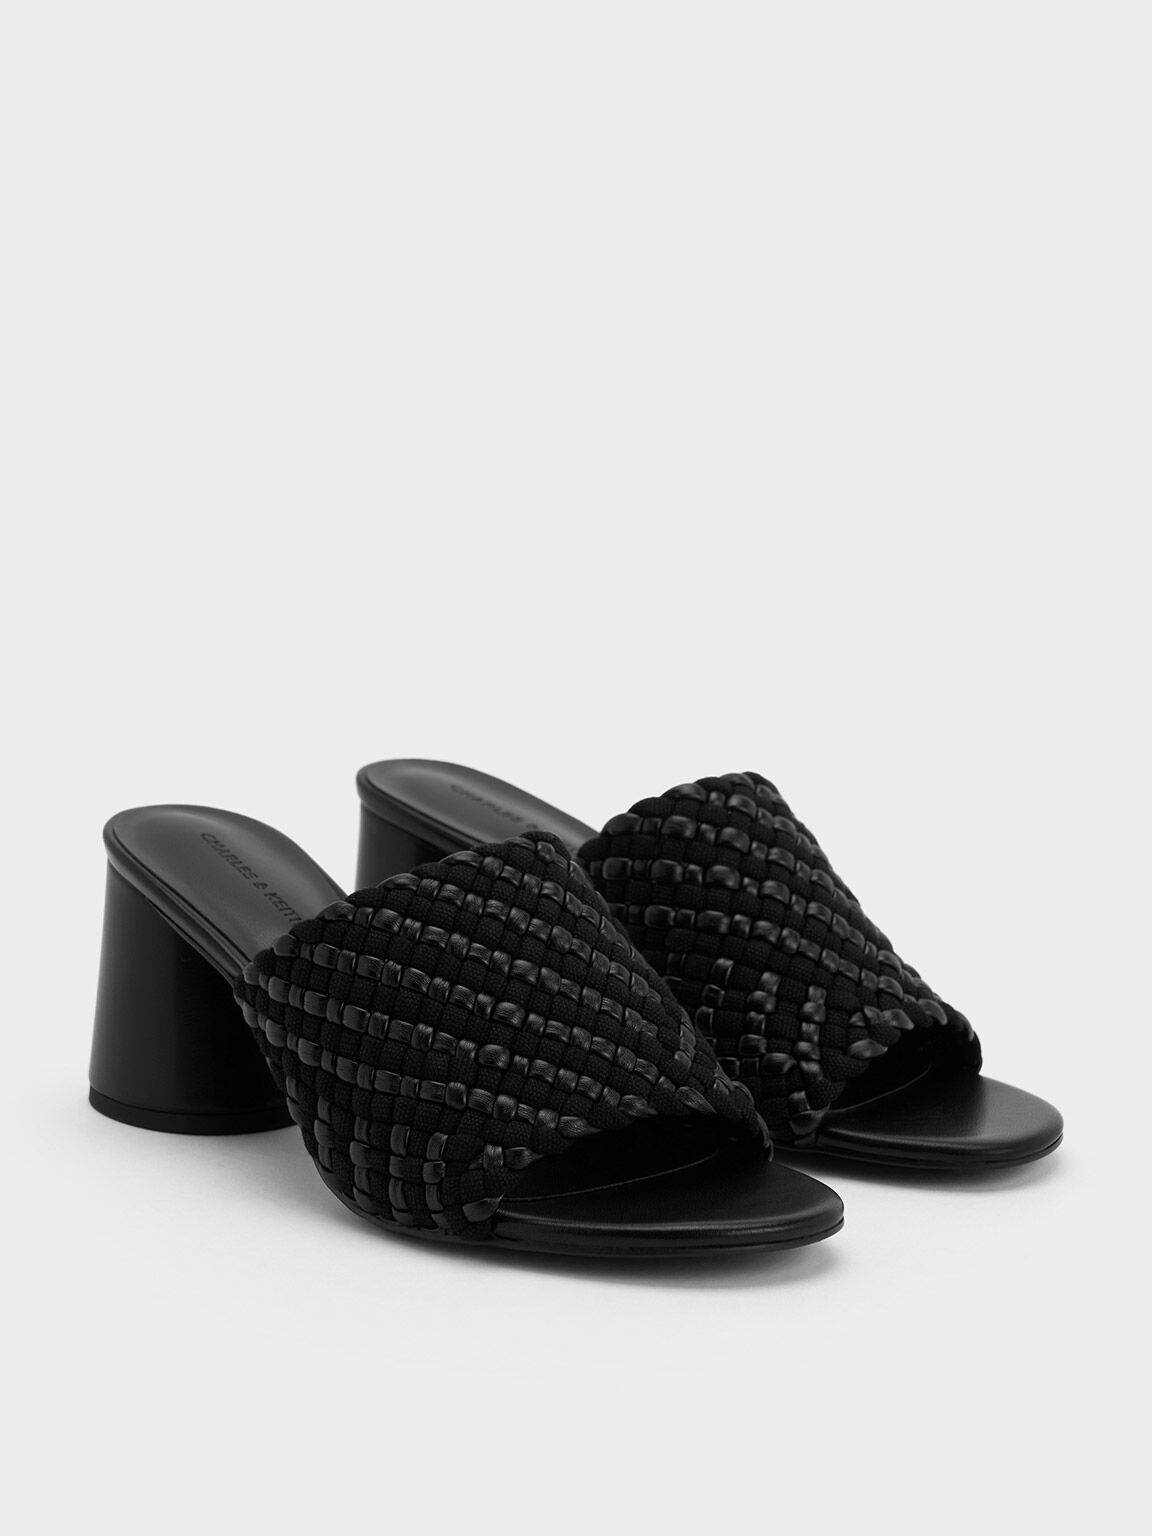 Sepatu Mules Block Heel Interwoven Canvas, Black, hi-res